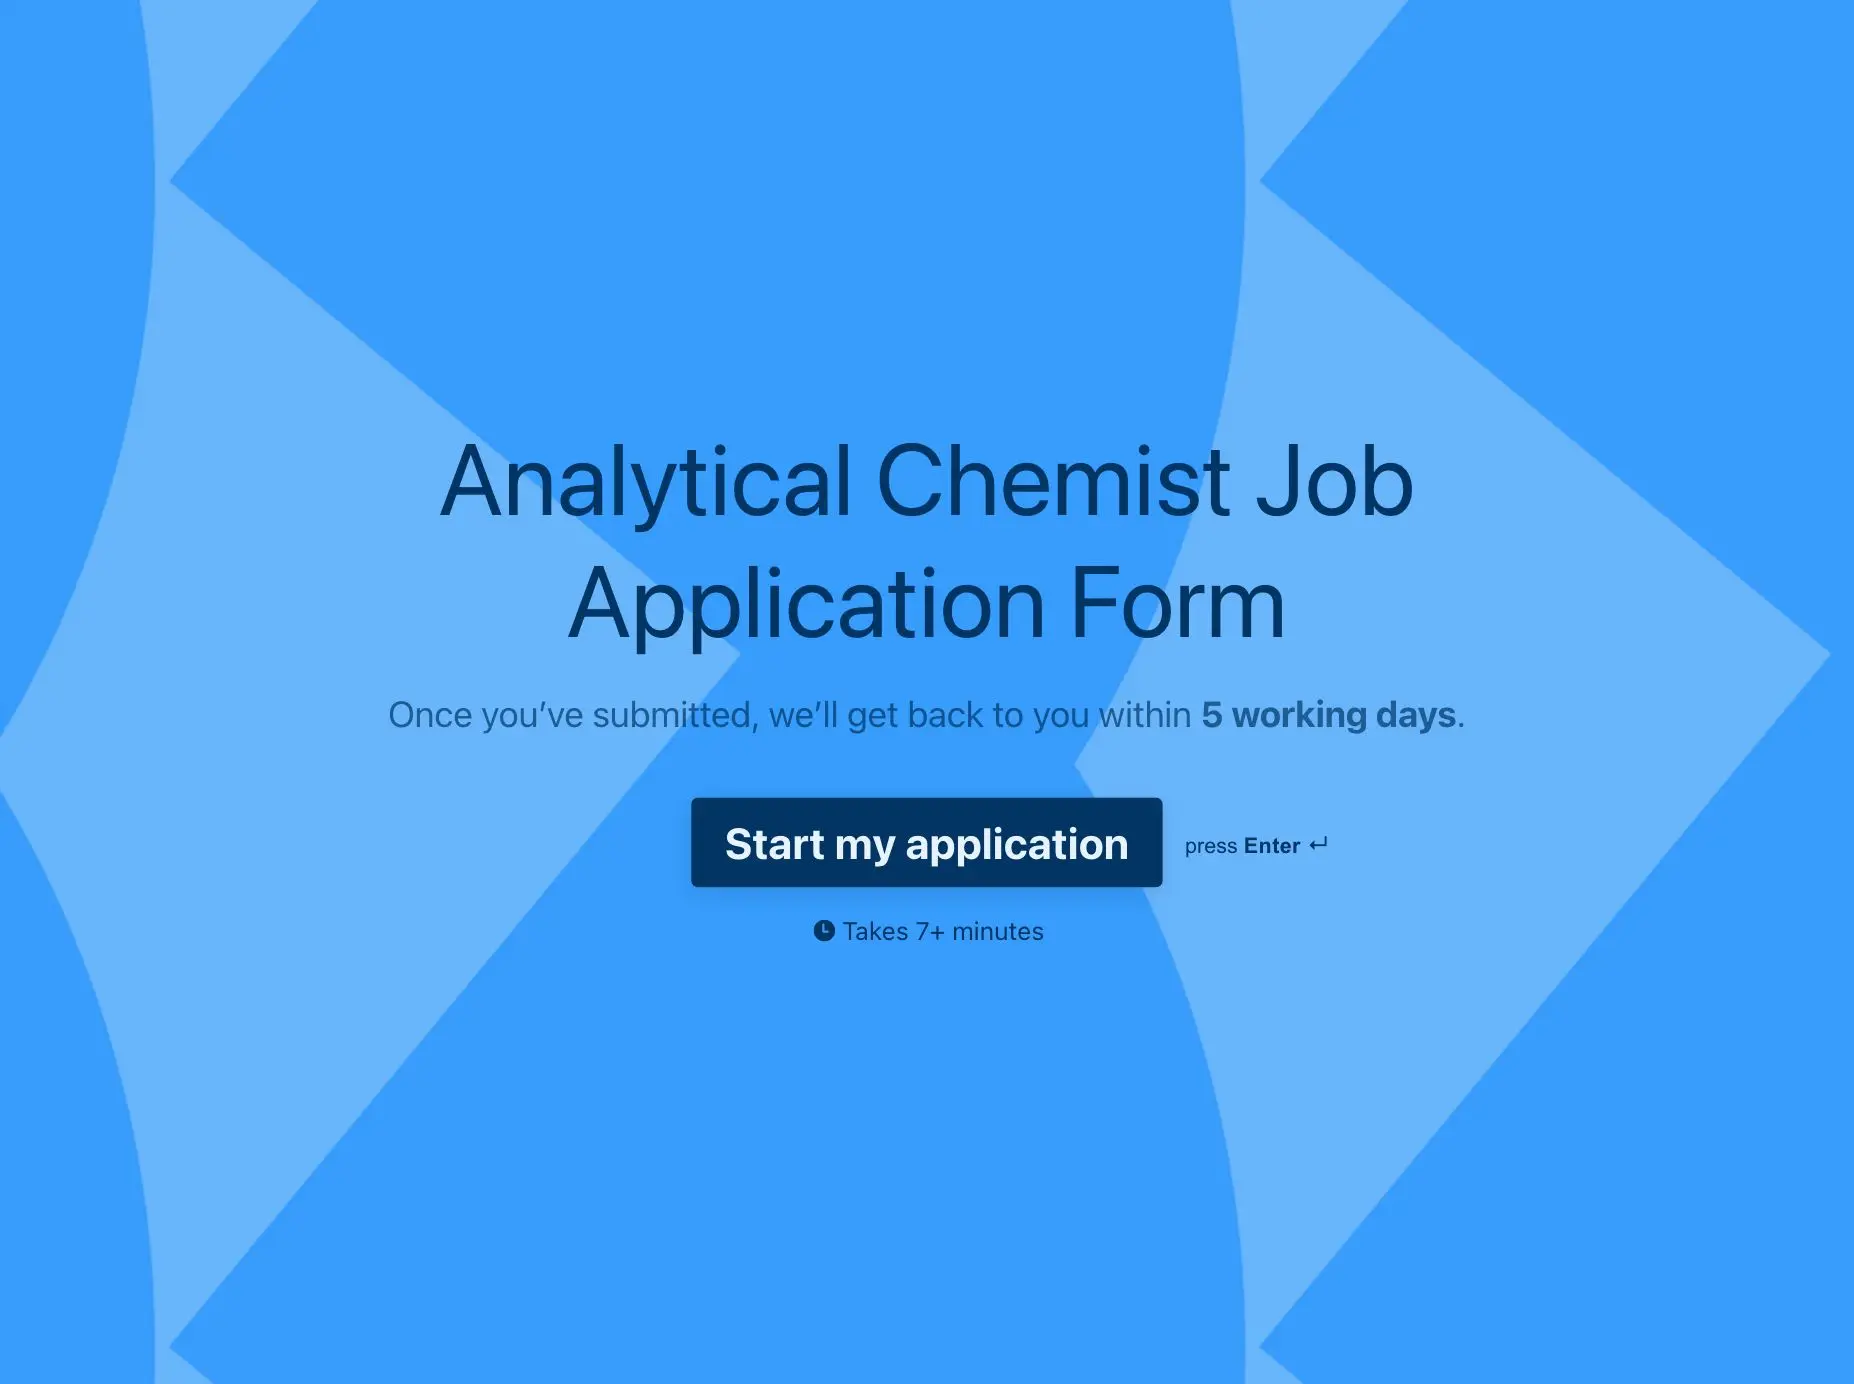 Analytical Chemist Job Application Form Template Hero